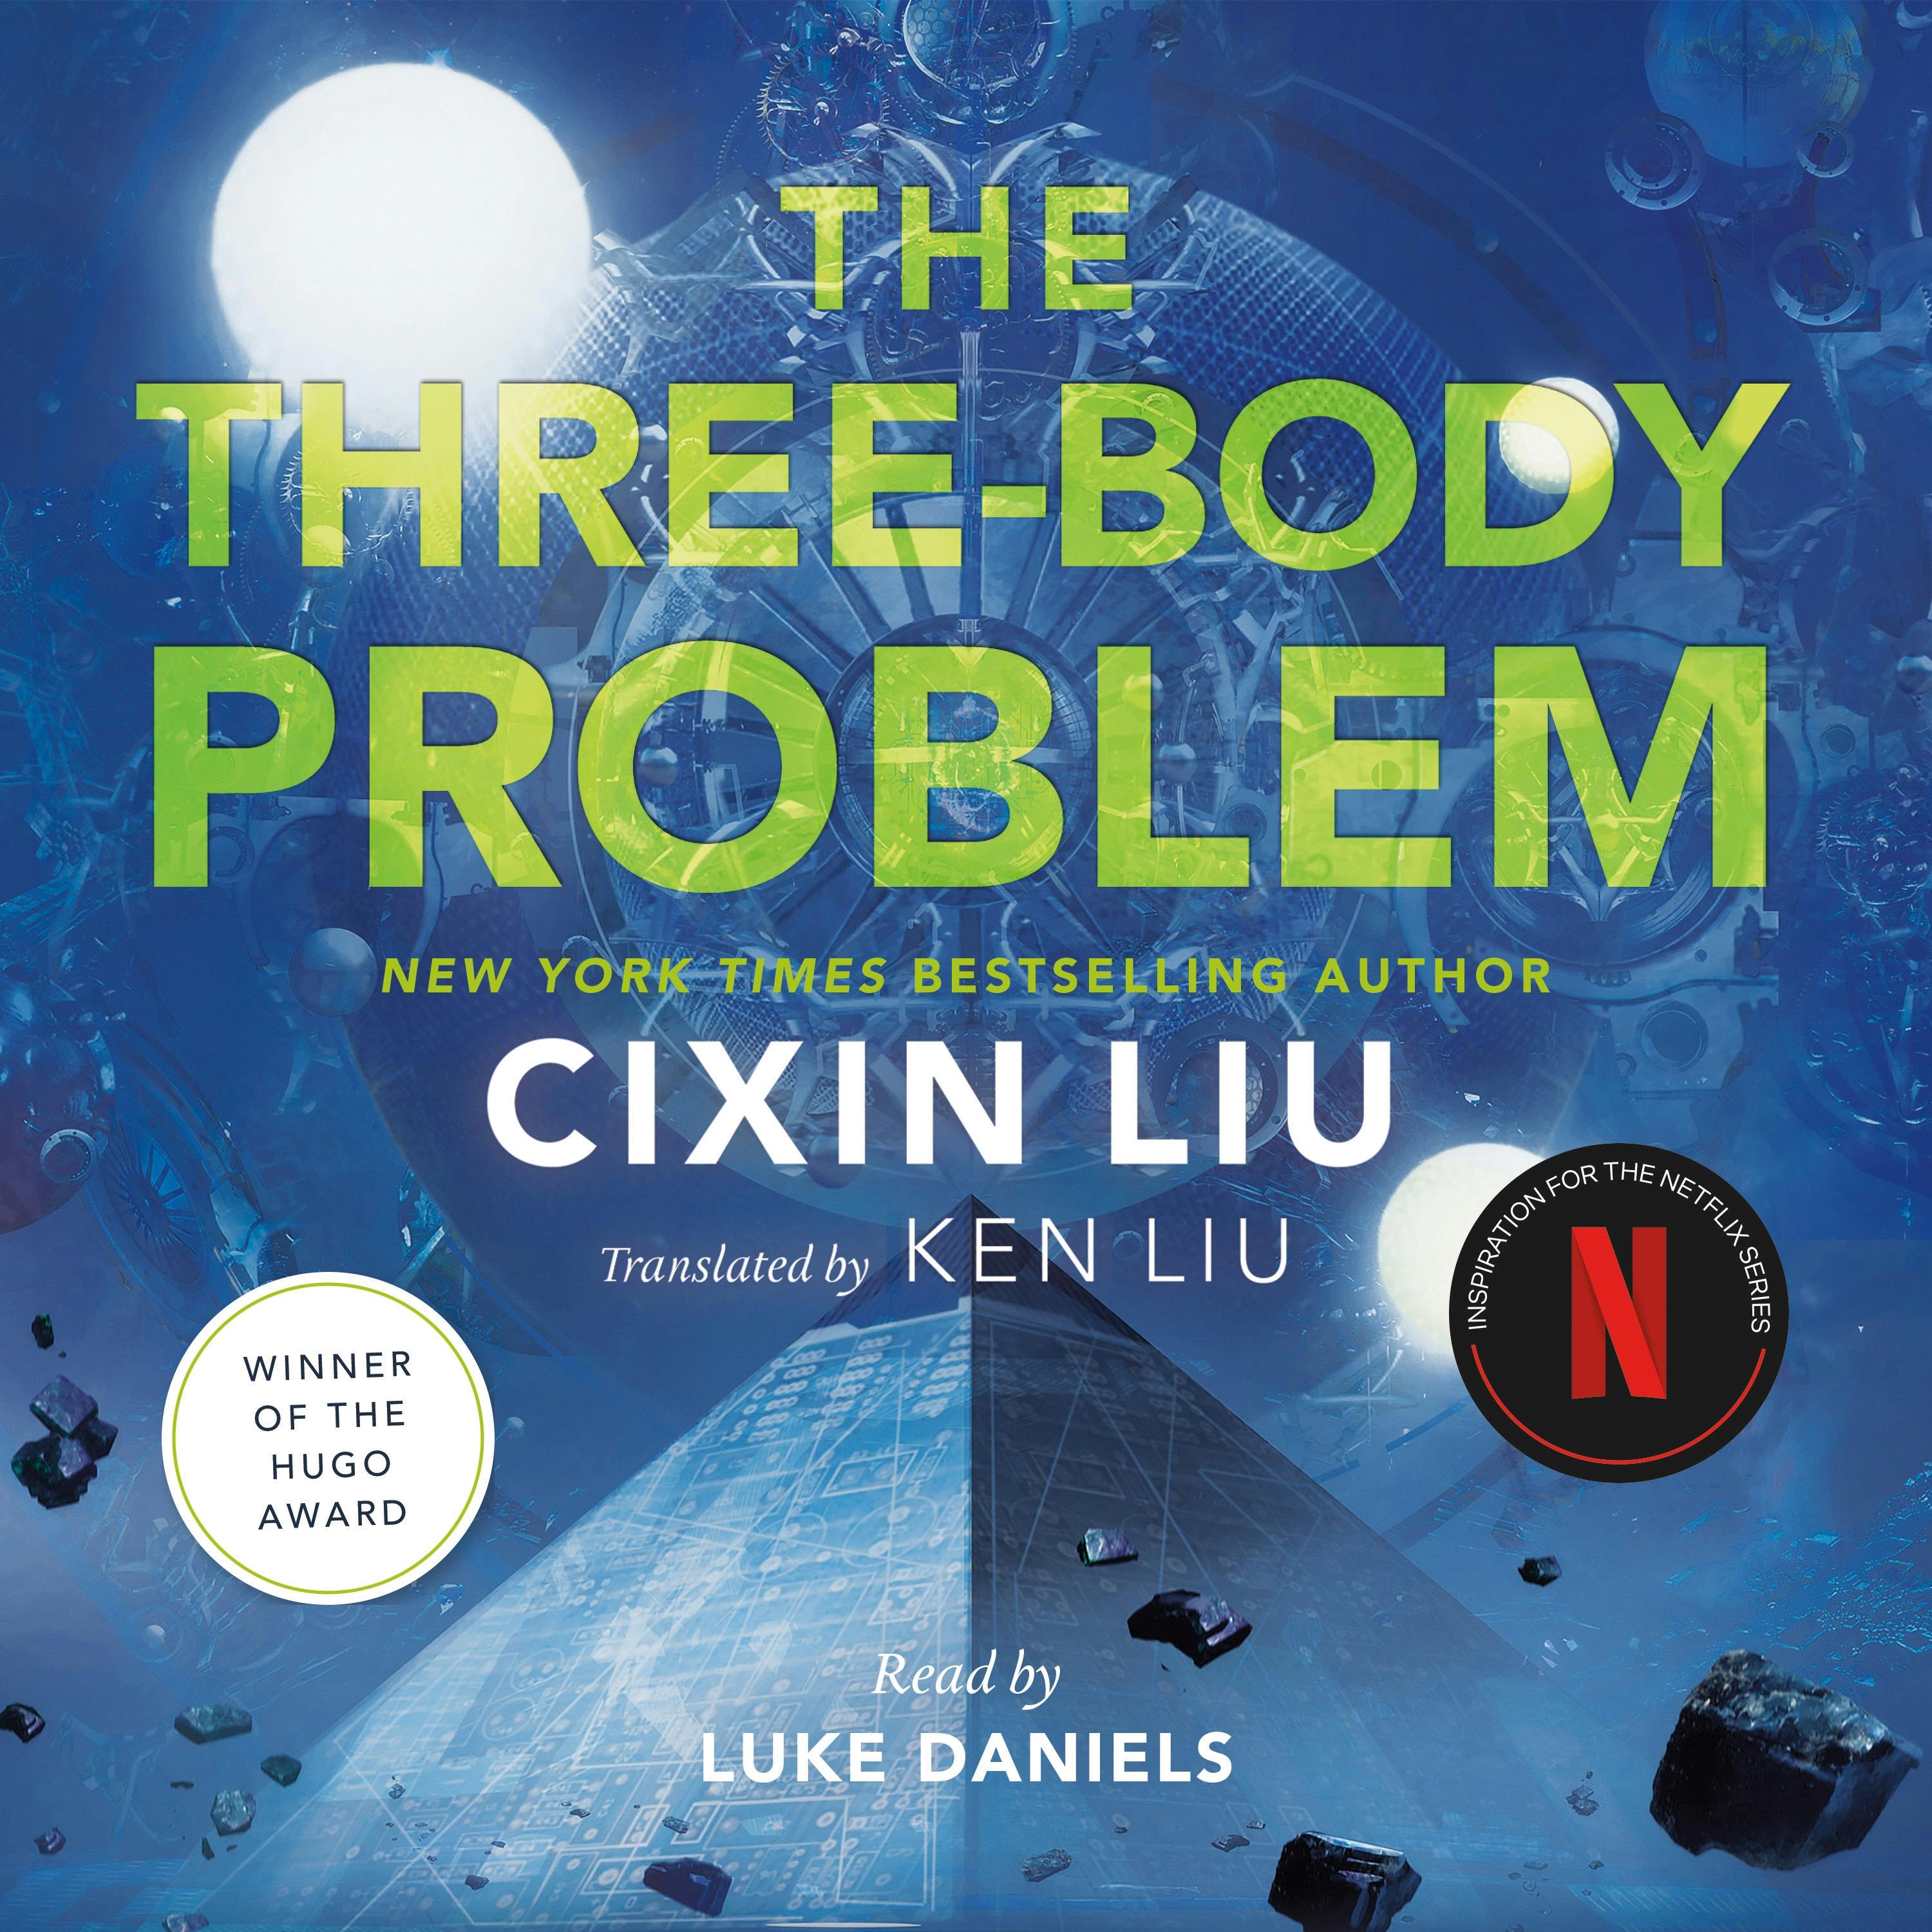 The three body problem. Лю Цысинь книги. Three body problem Netflix. Лю Цысинь "задача трех тел". The three body problem book.